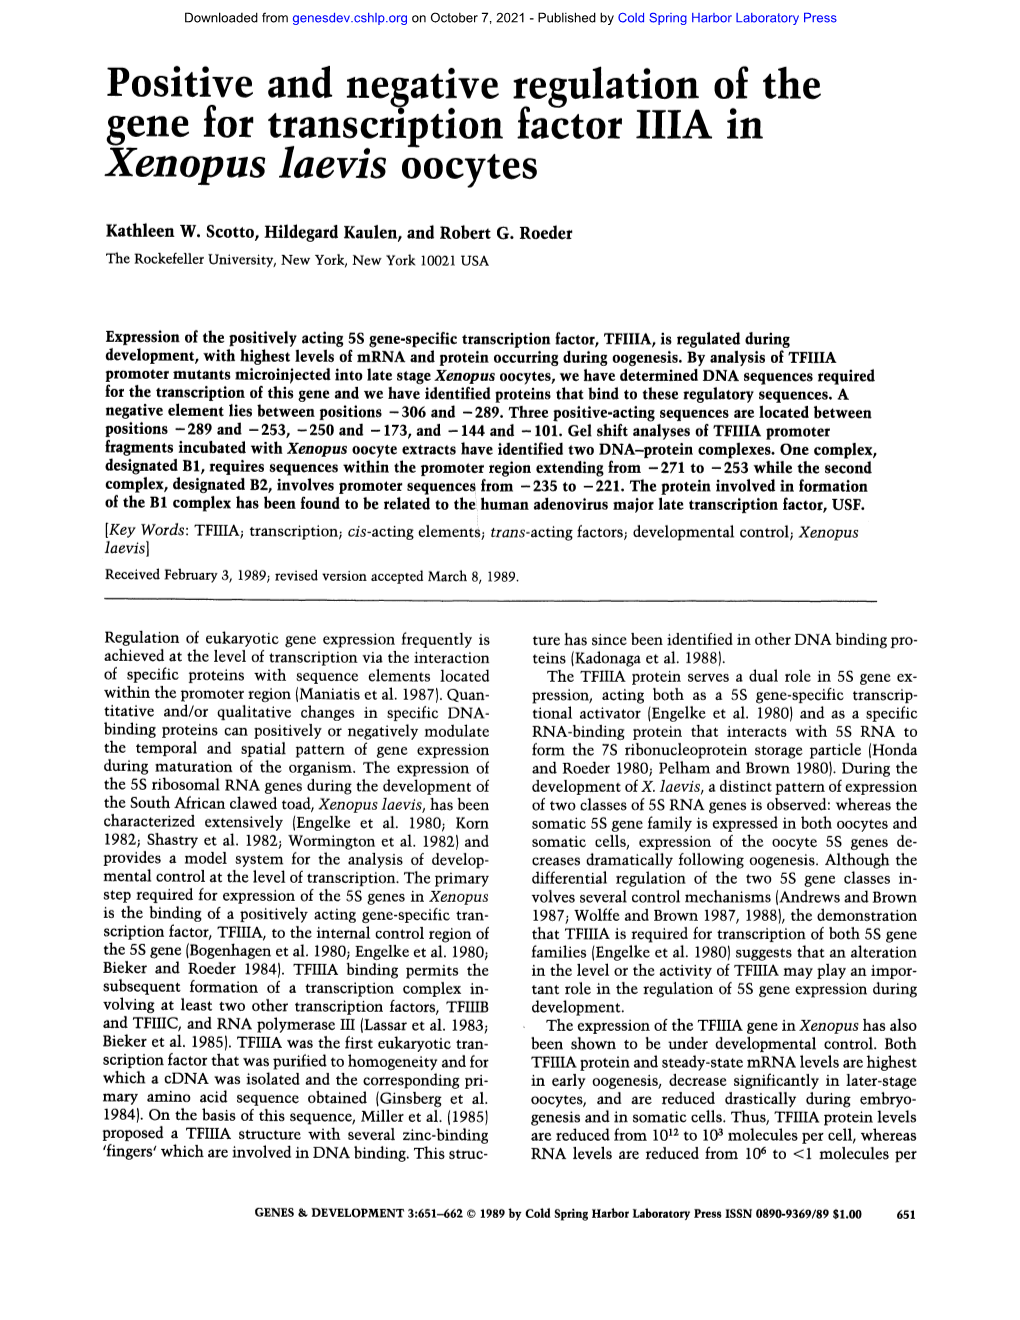 Xenopus Laevis Oocytes